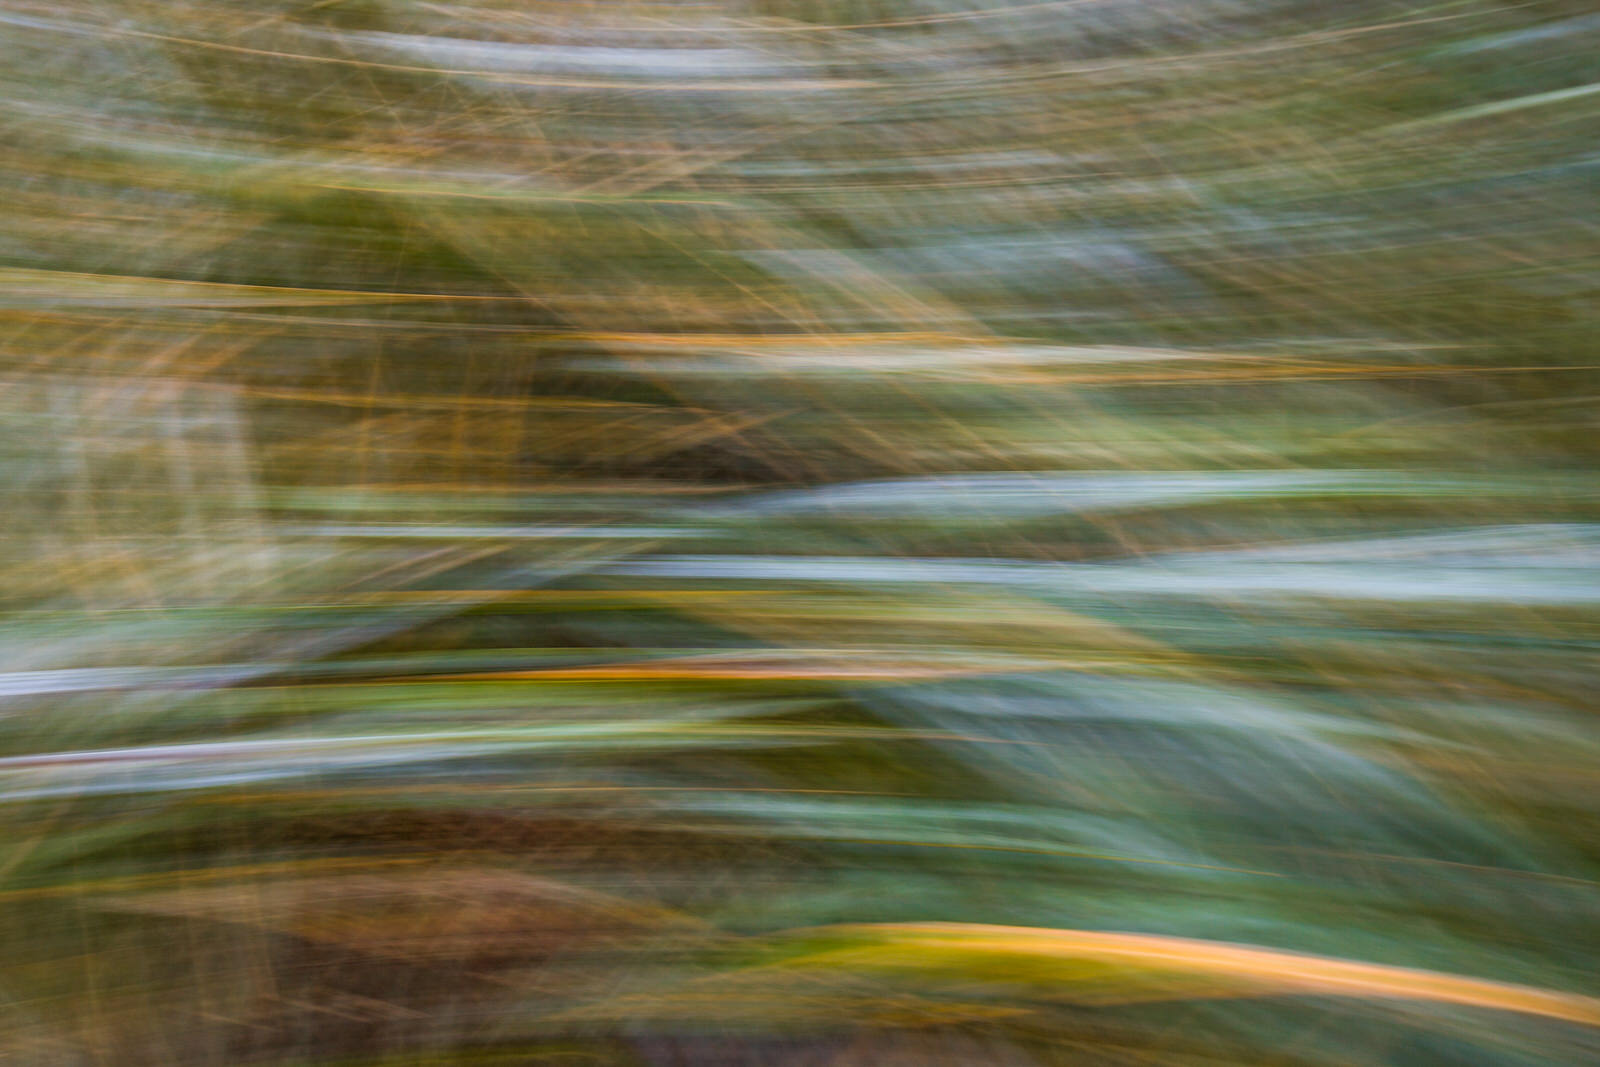  Rialto dune grass motion blur 